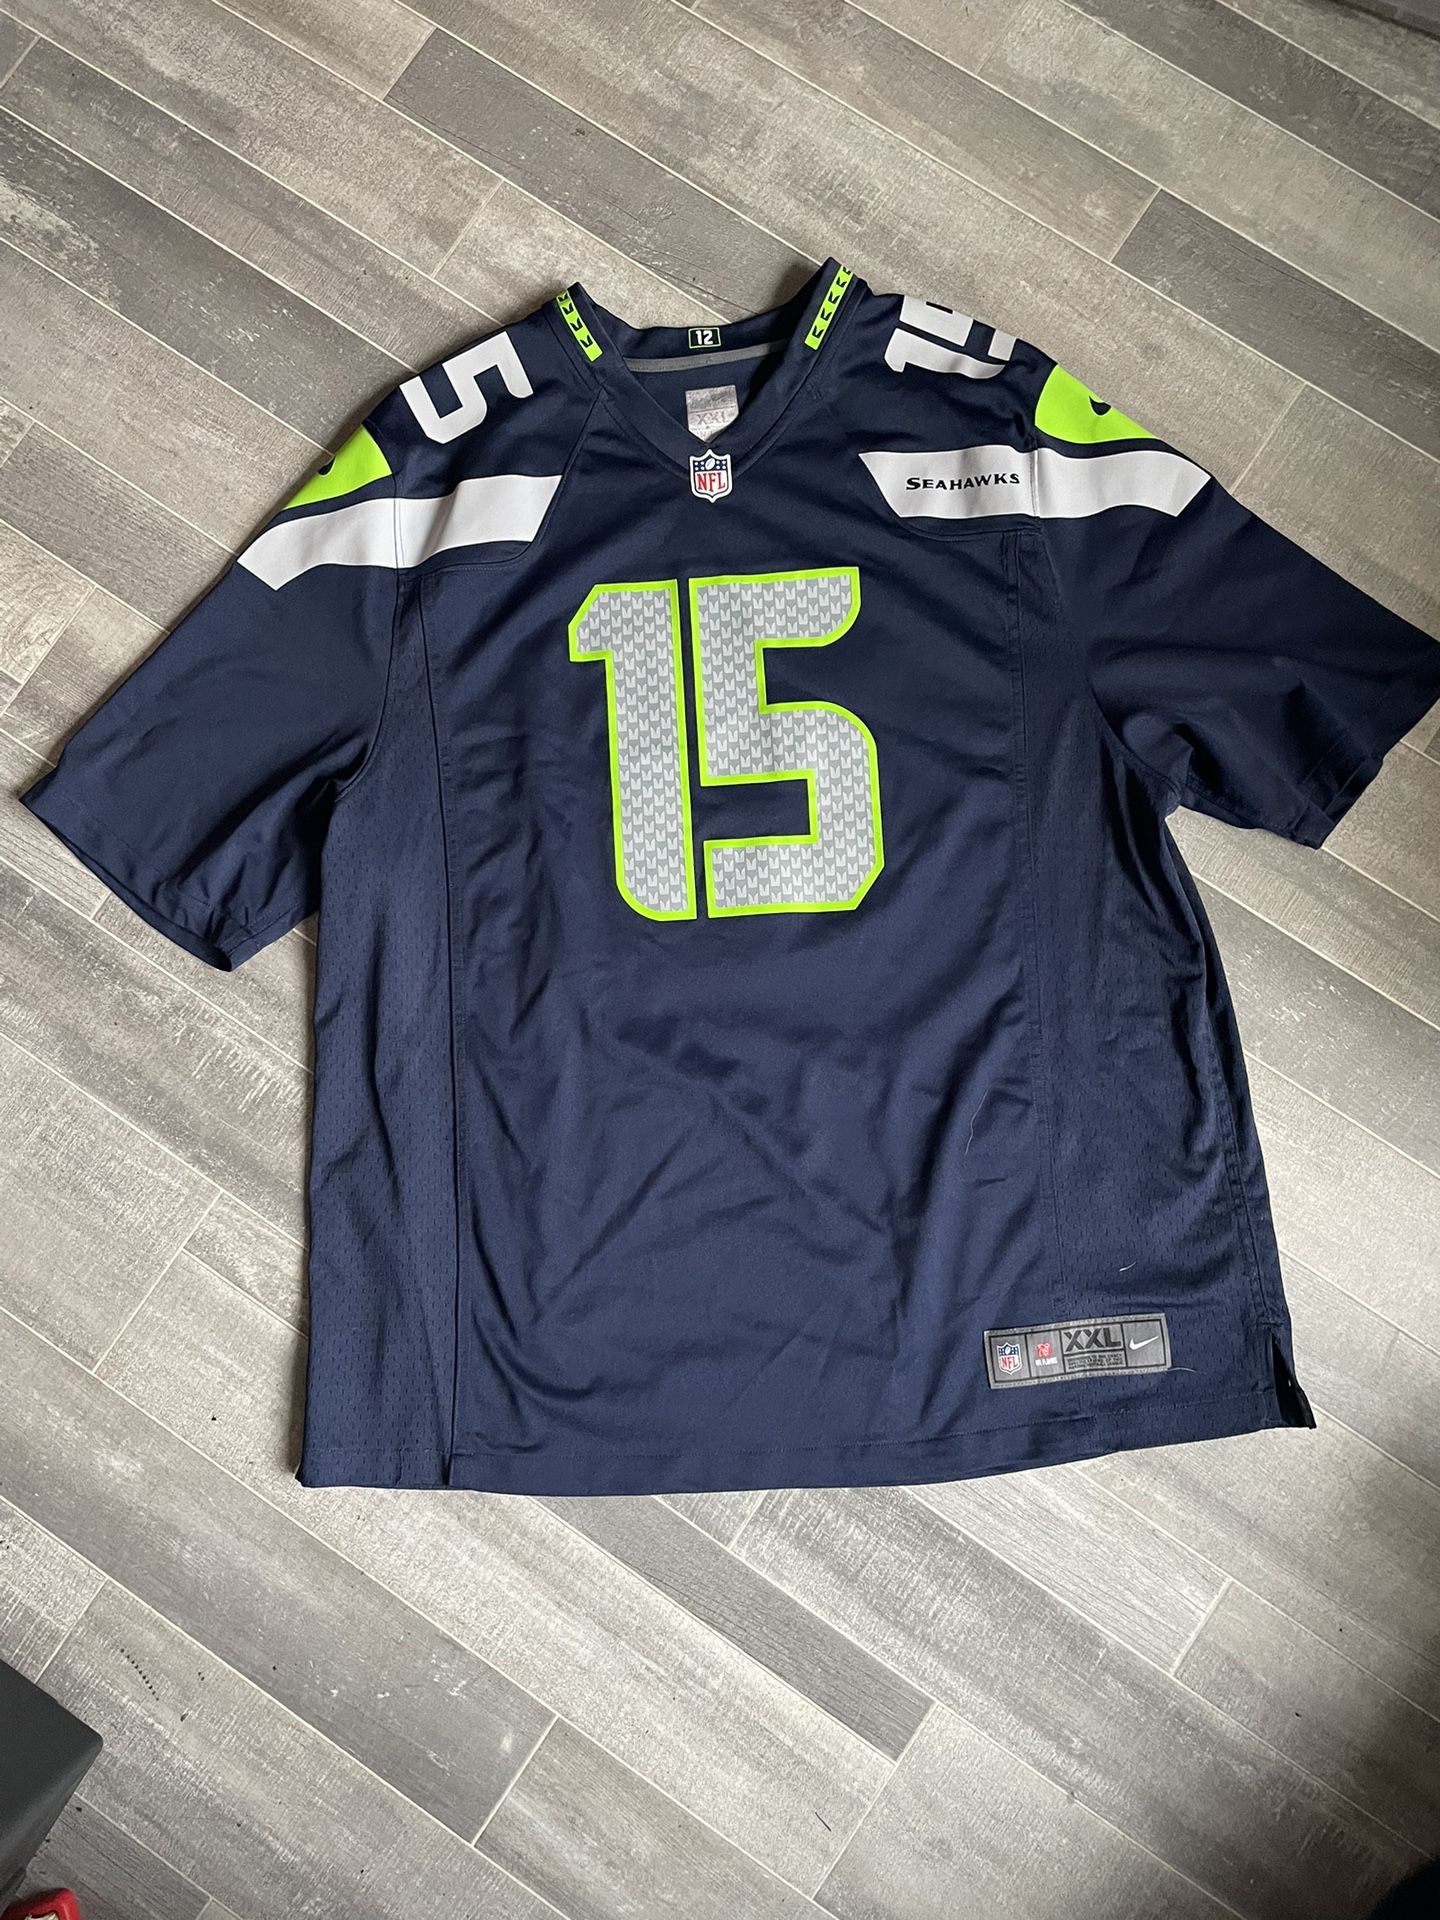 Mens  NFL Seattle Seahawks #15 Flynn Jersey Size  2XL Short Sleeve V-Neck